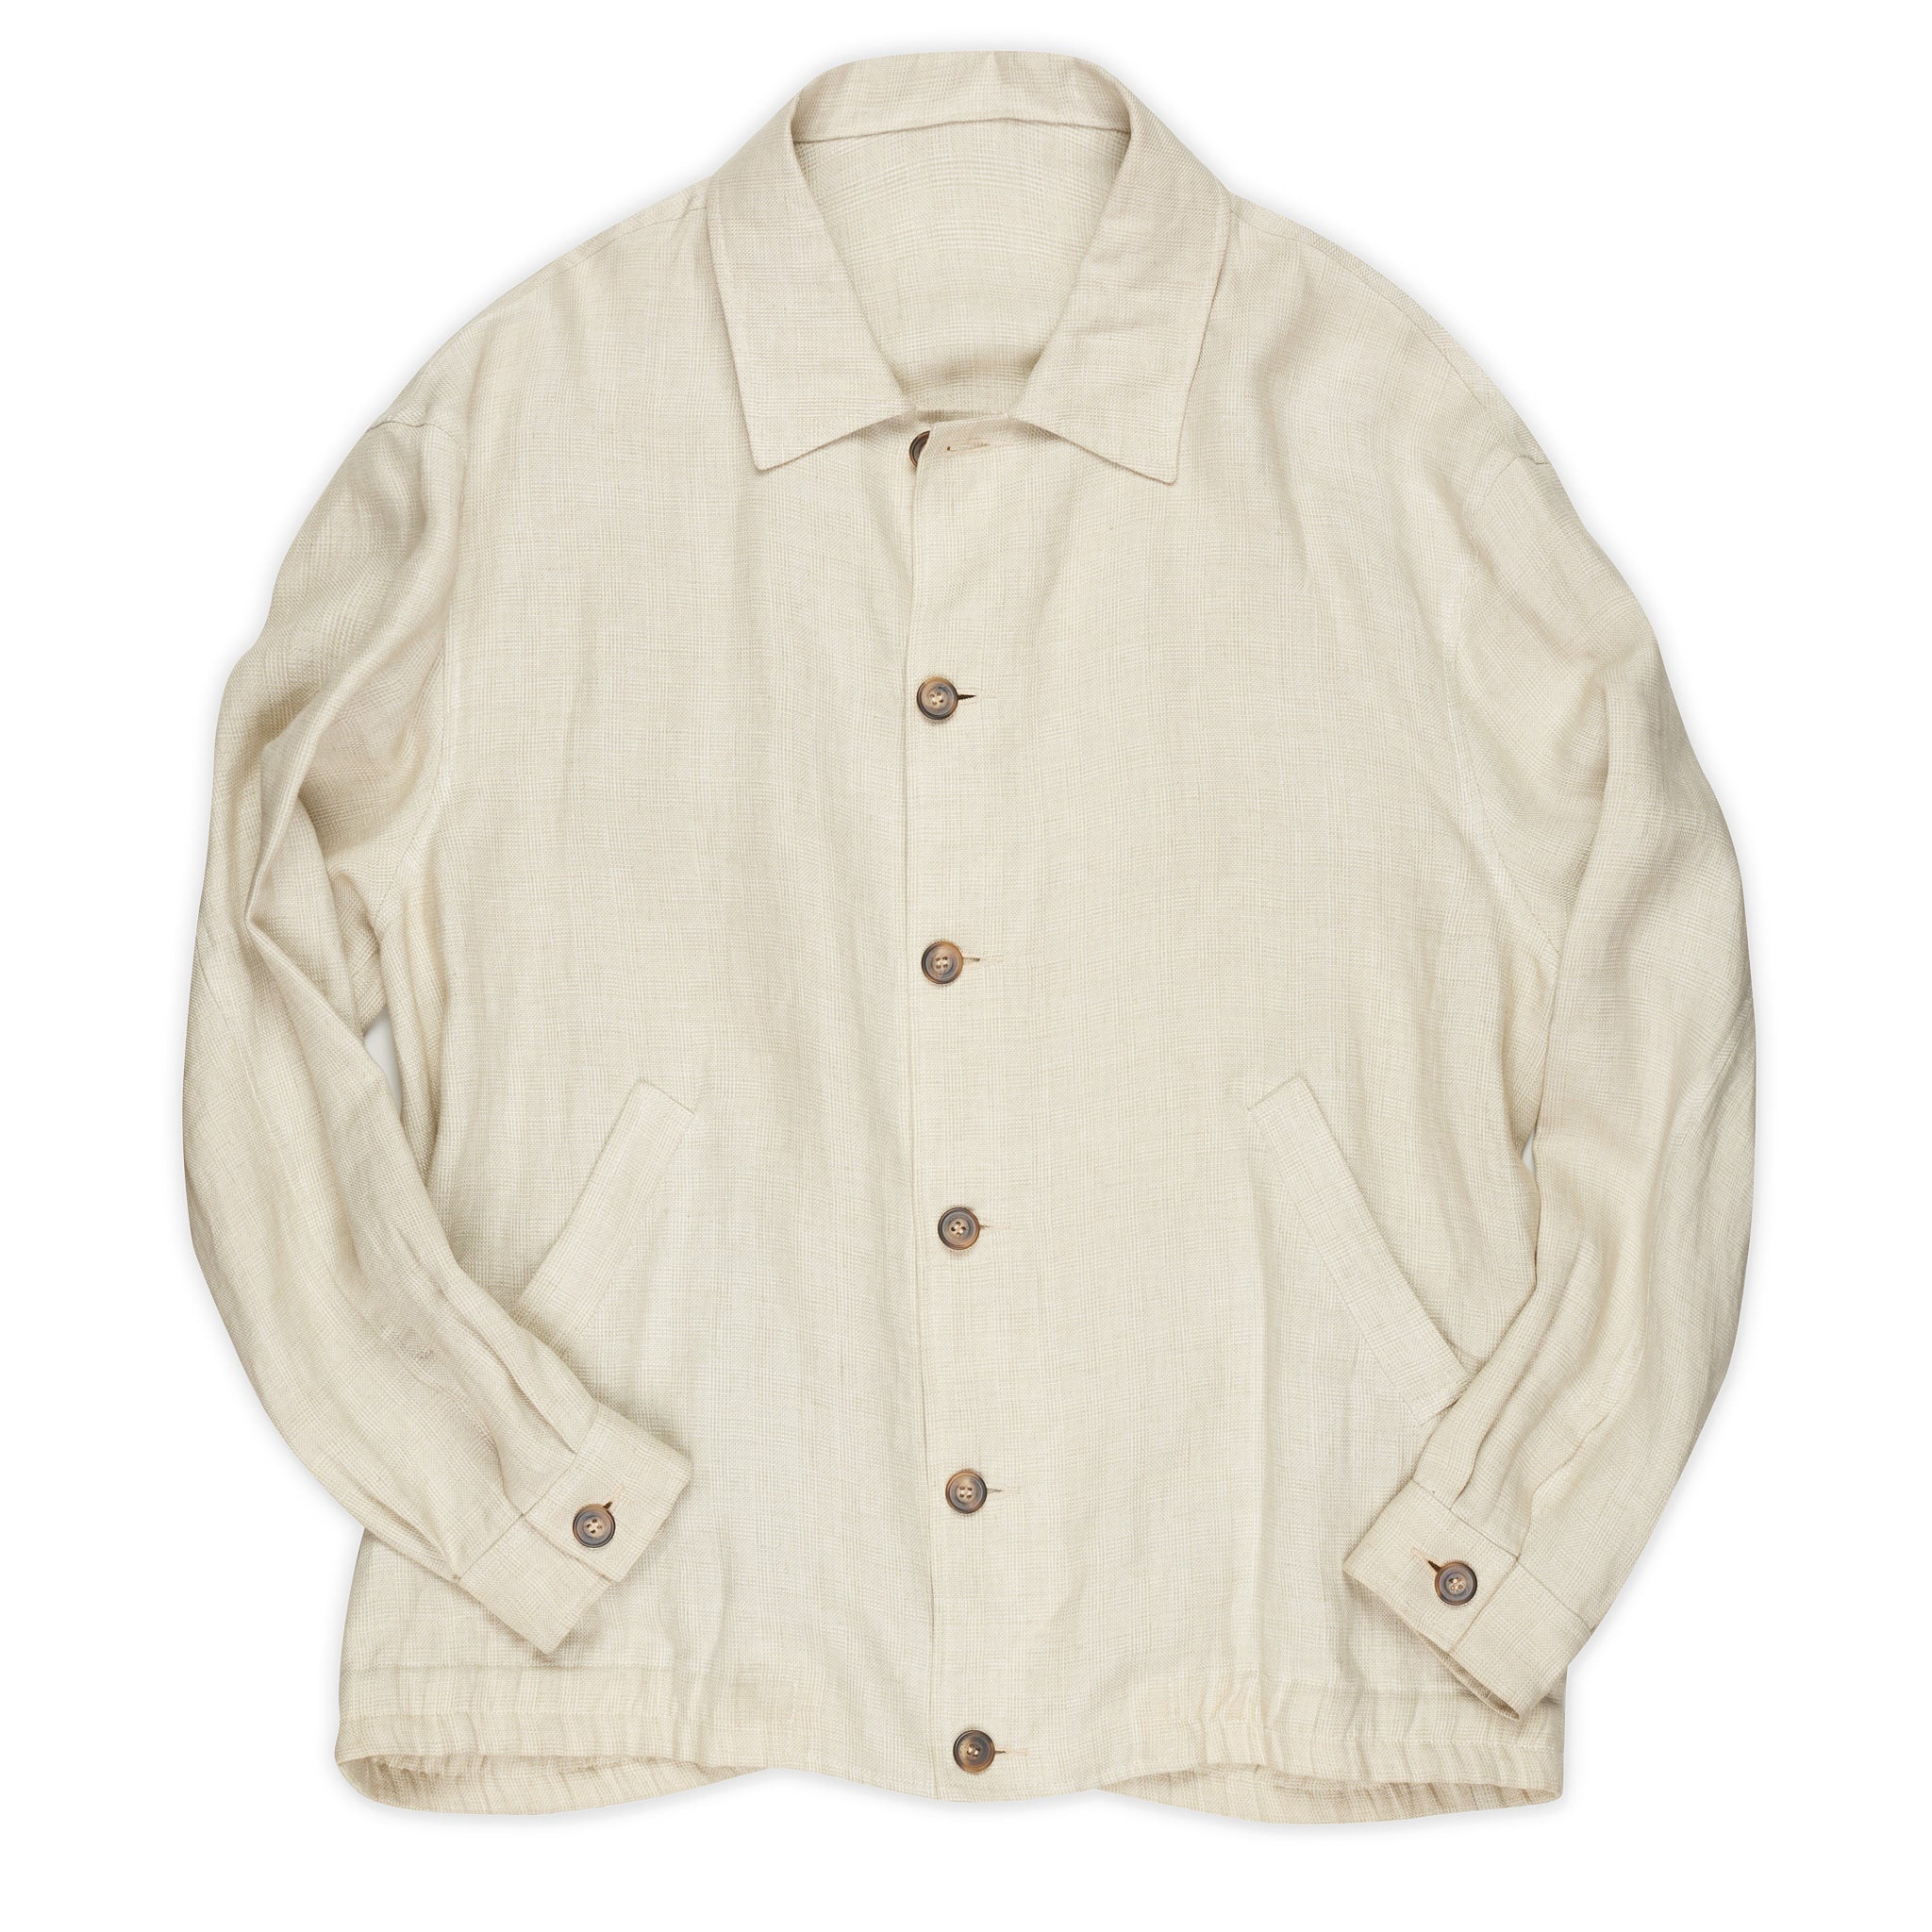 Mariano RUBINACCI LH Ivory Textured Plaid Linen Jacket Coat EU 58 NEW US 48 RUBINACCI